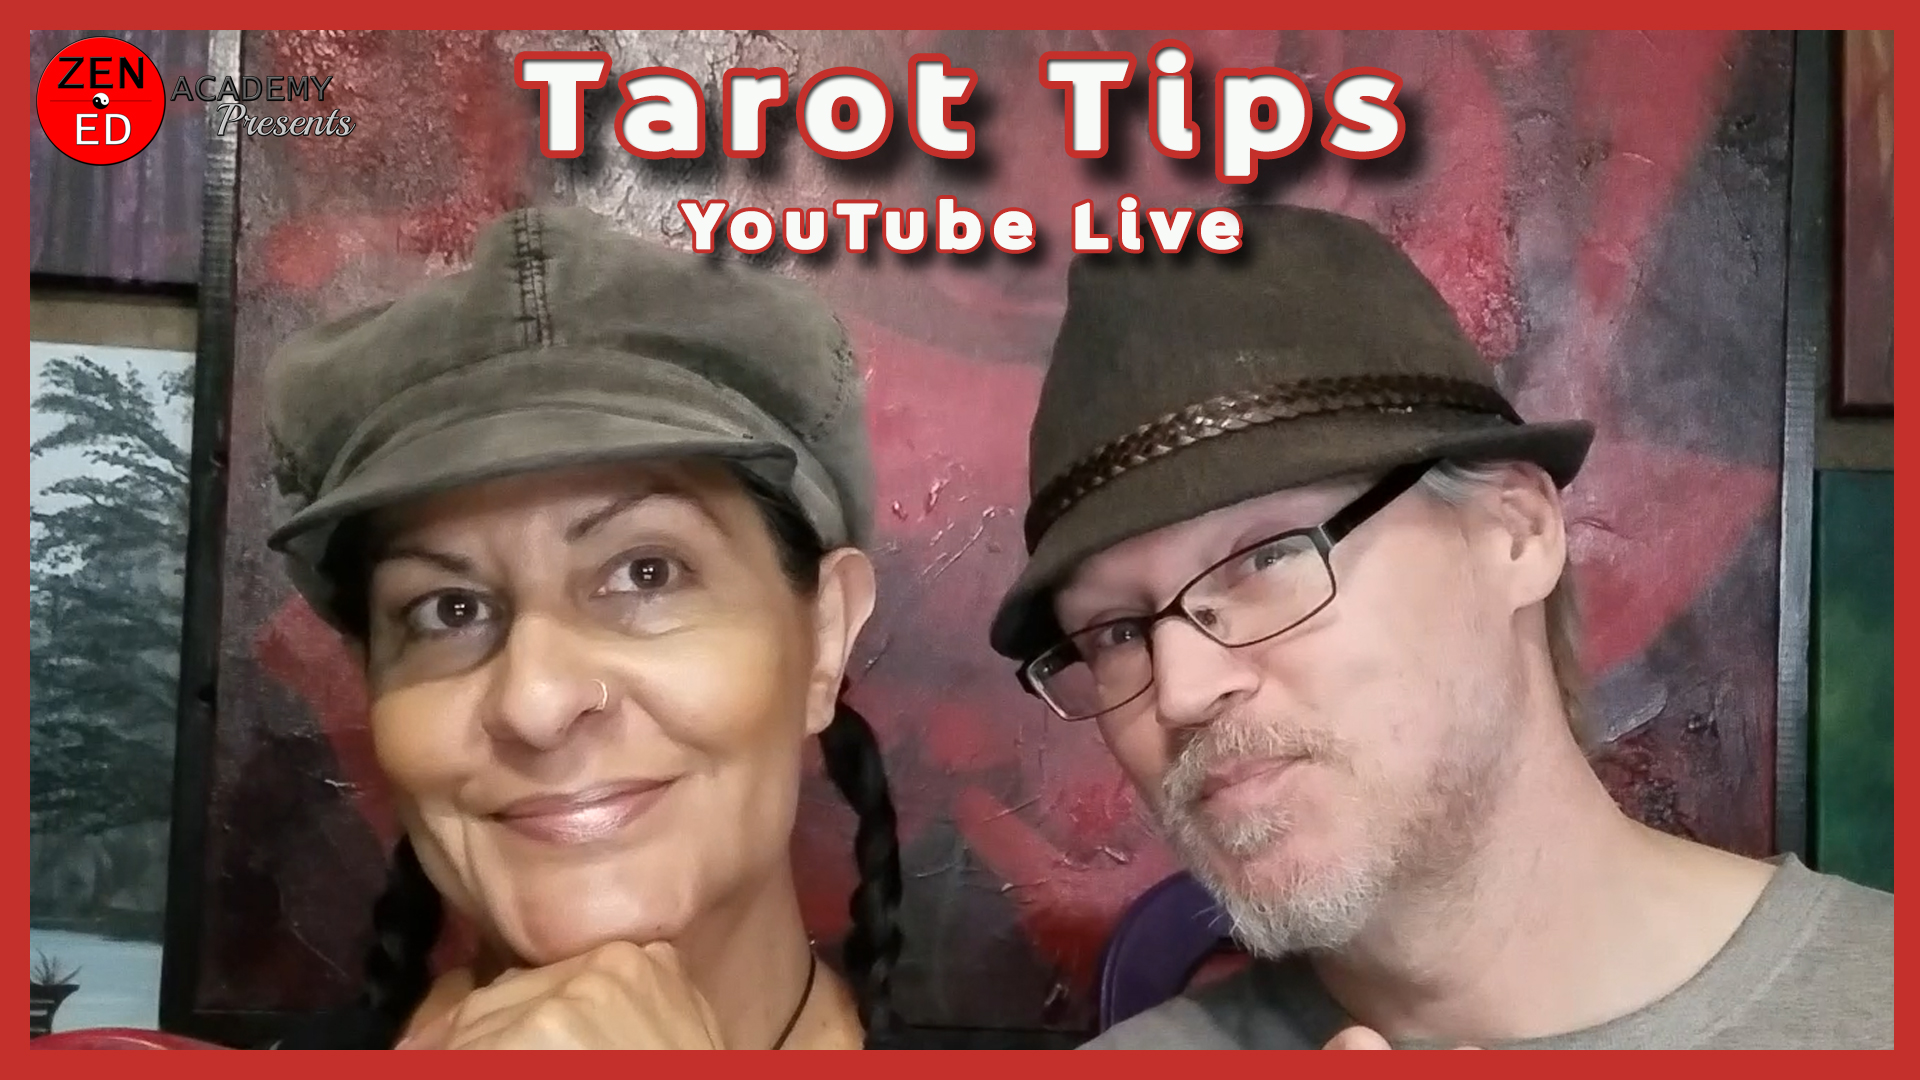 Come play THE EMOJI GAME & Win a FREE Tarot Card Pull LIVE! Free Tarot Tips